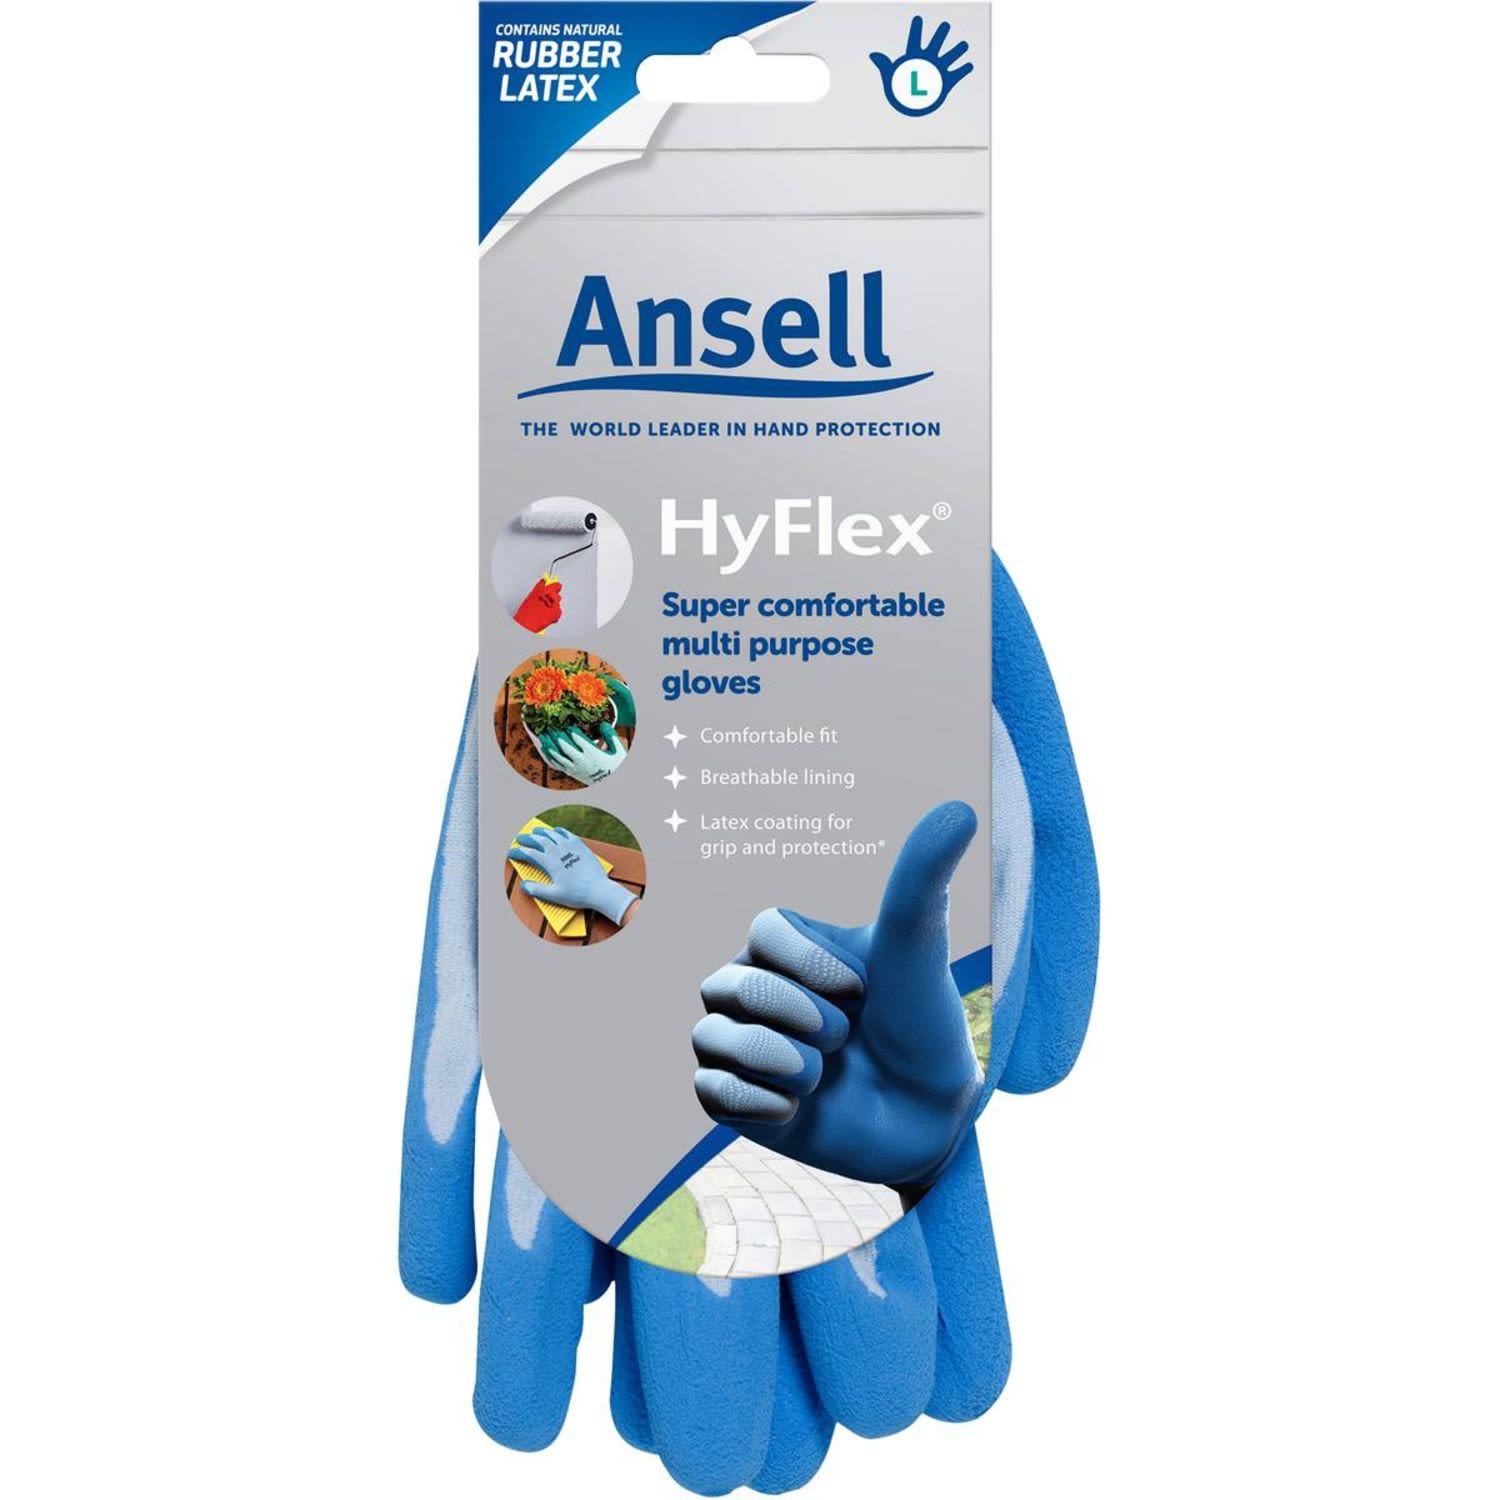 Ansell Glove Hyflex Large, 1 Each